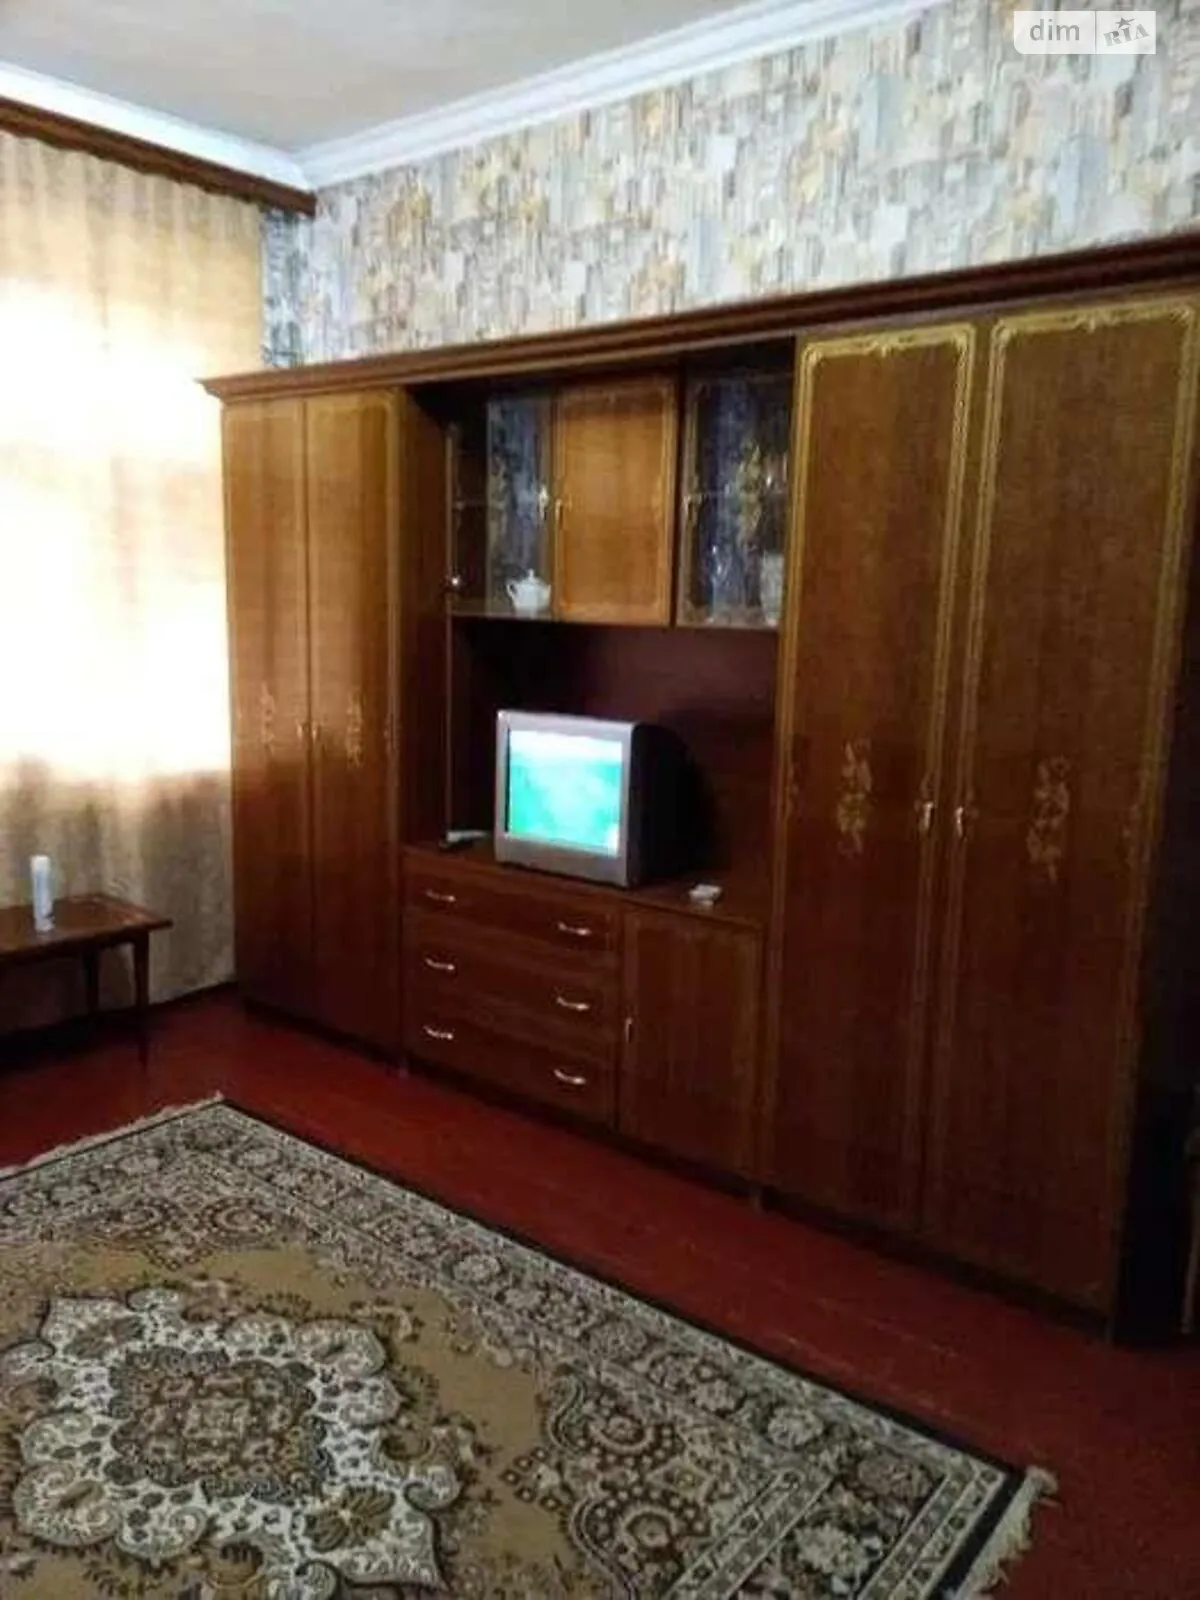 Продается комната 22 кв. м в Харькове - фото 3